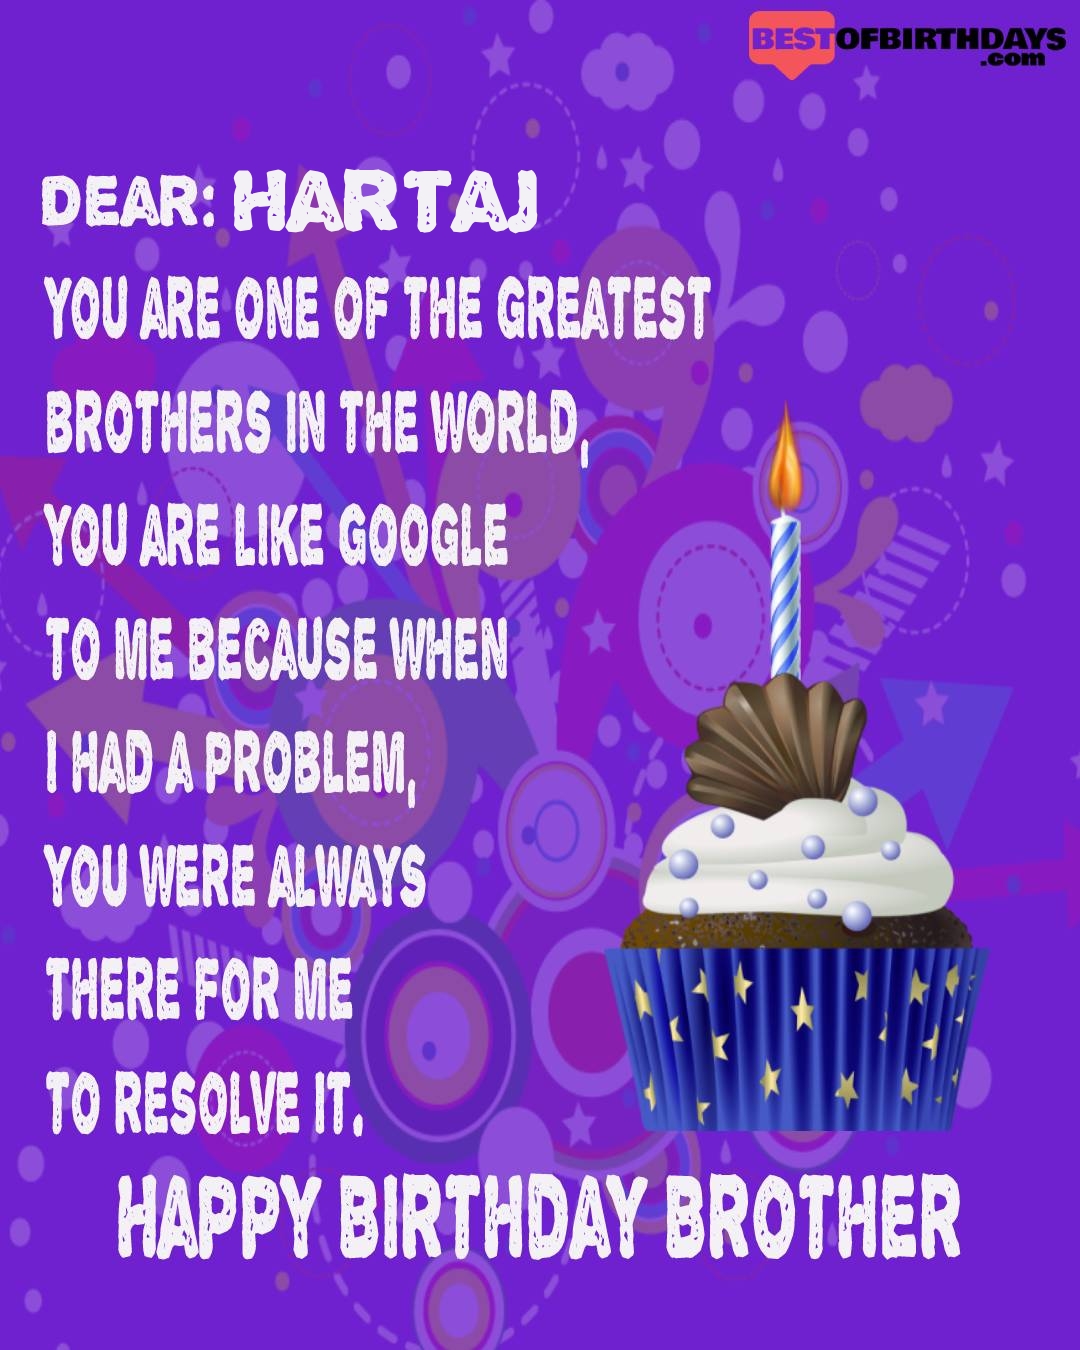 Happy birthday hartaj bhai brother bro